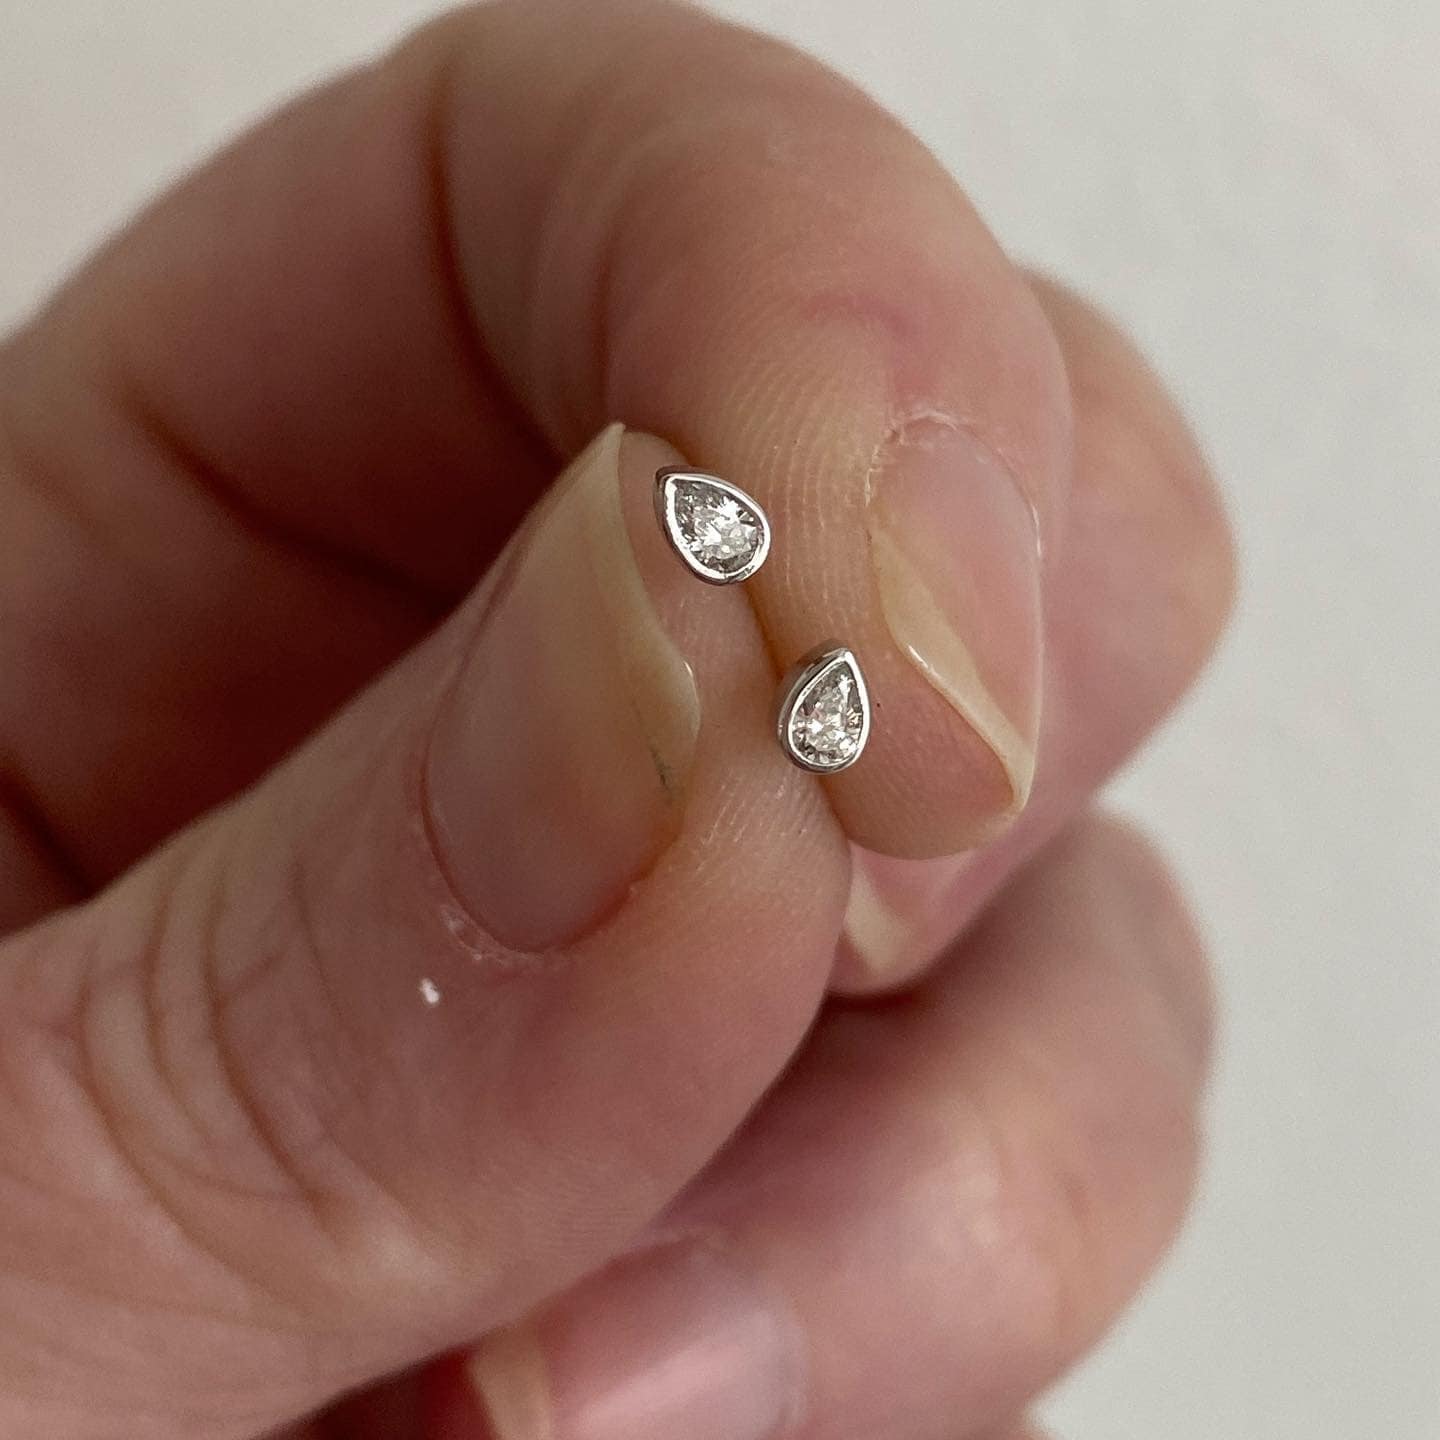 Pear Cut Diamond Stud Earrings in Solid 14K White Gold, Bezel Set, Small, Natural Diamond.